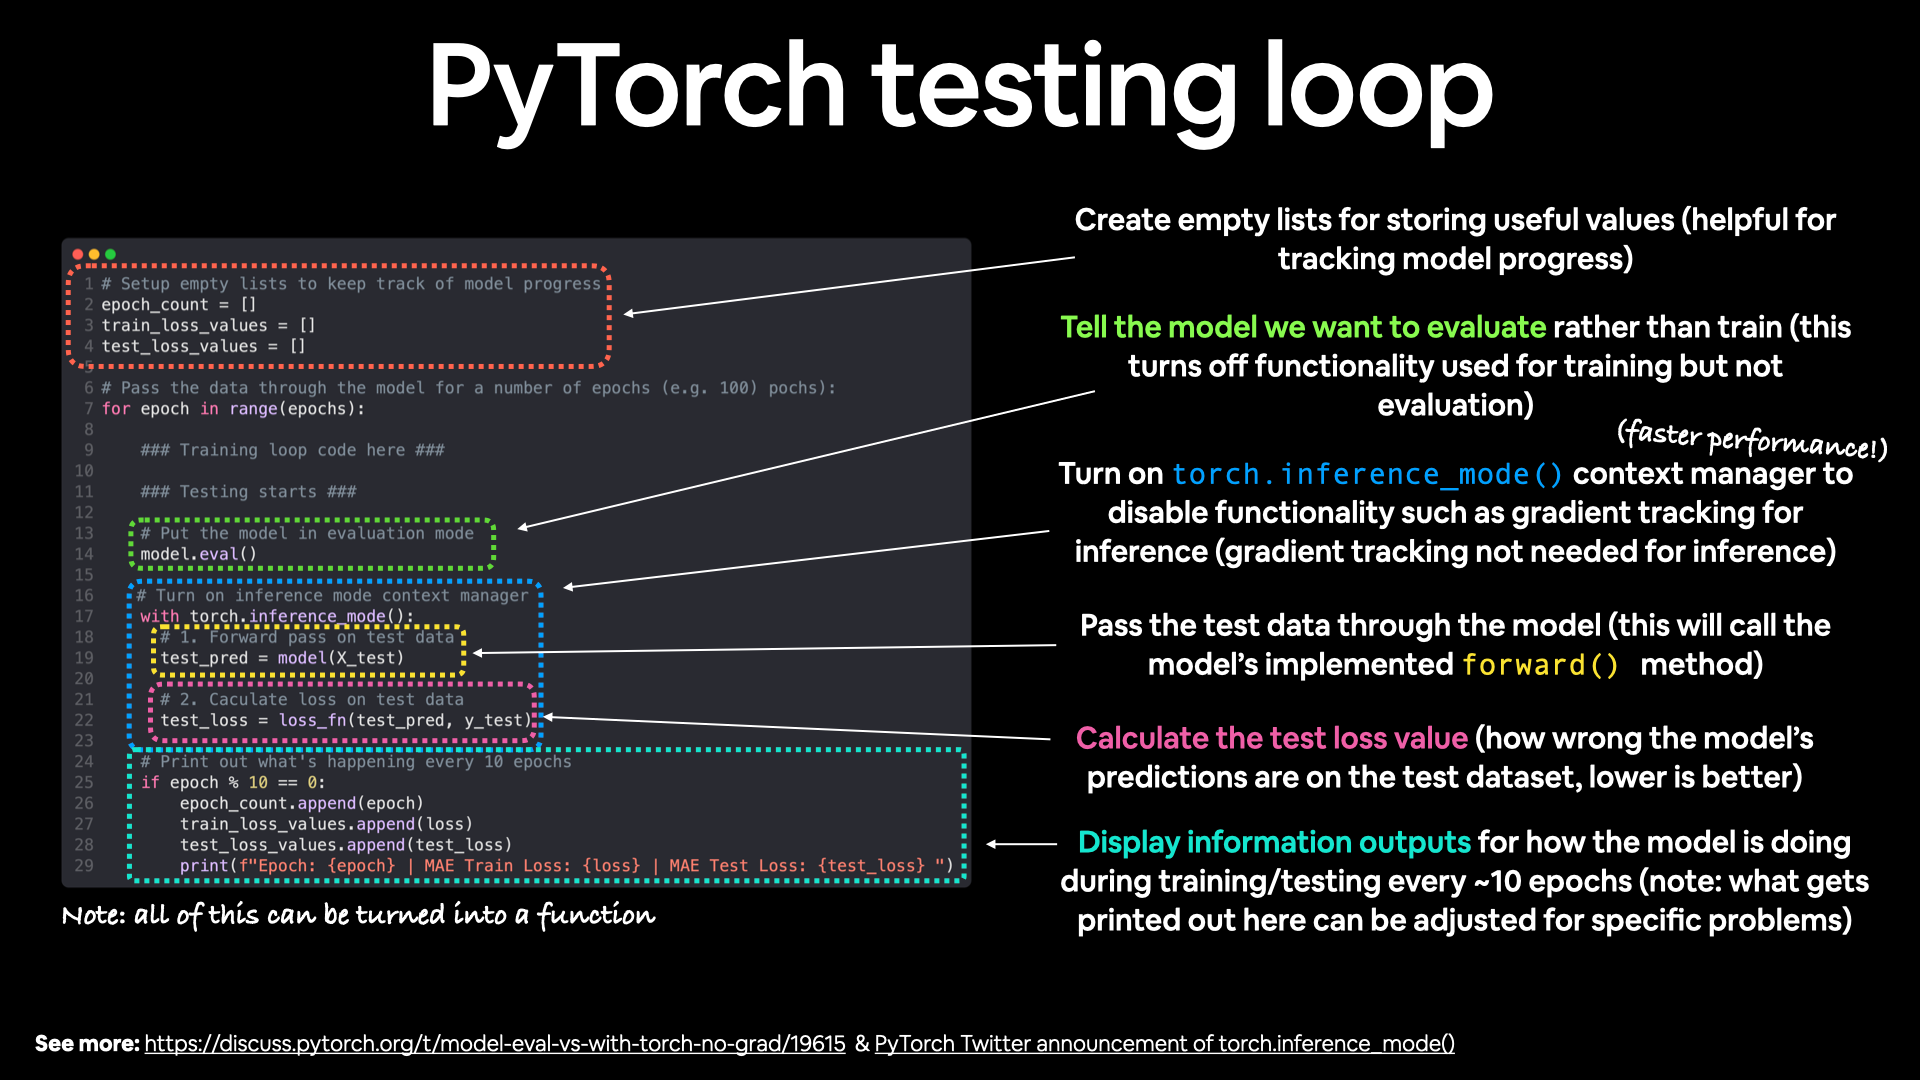 steps in a PyTorch testing loop